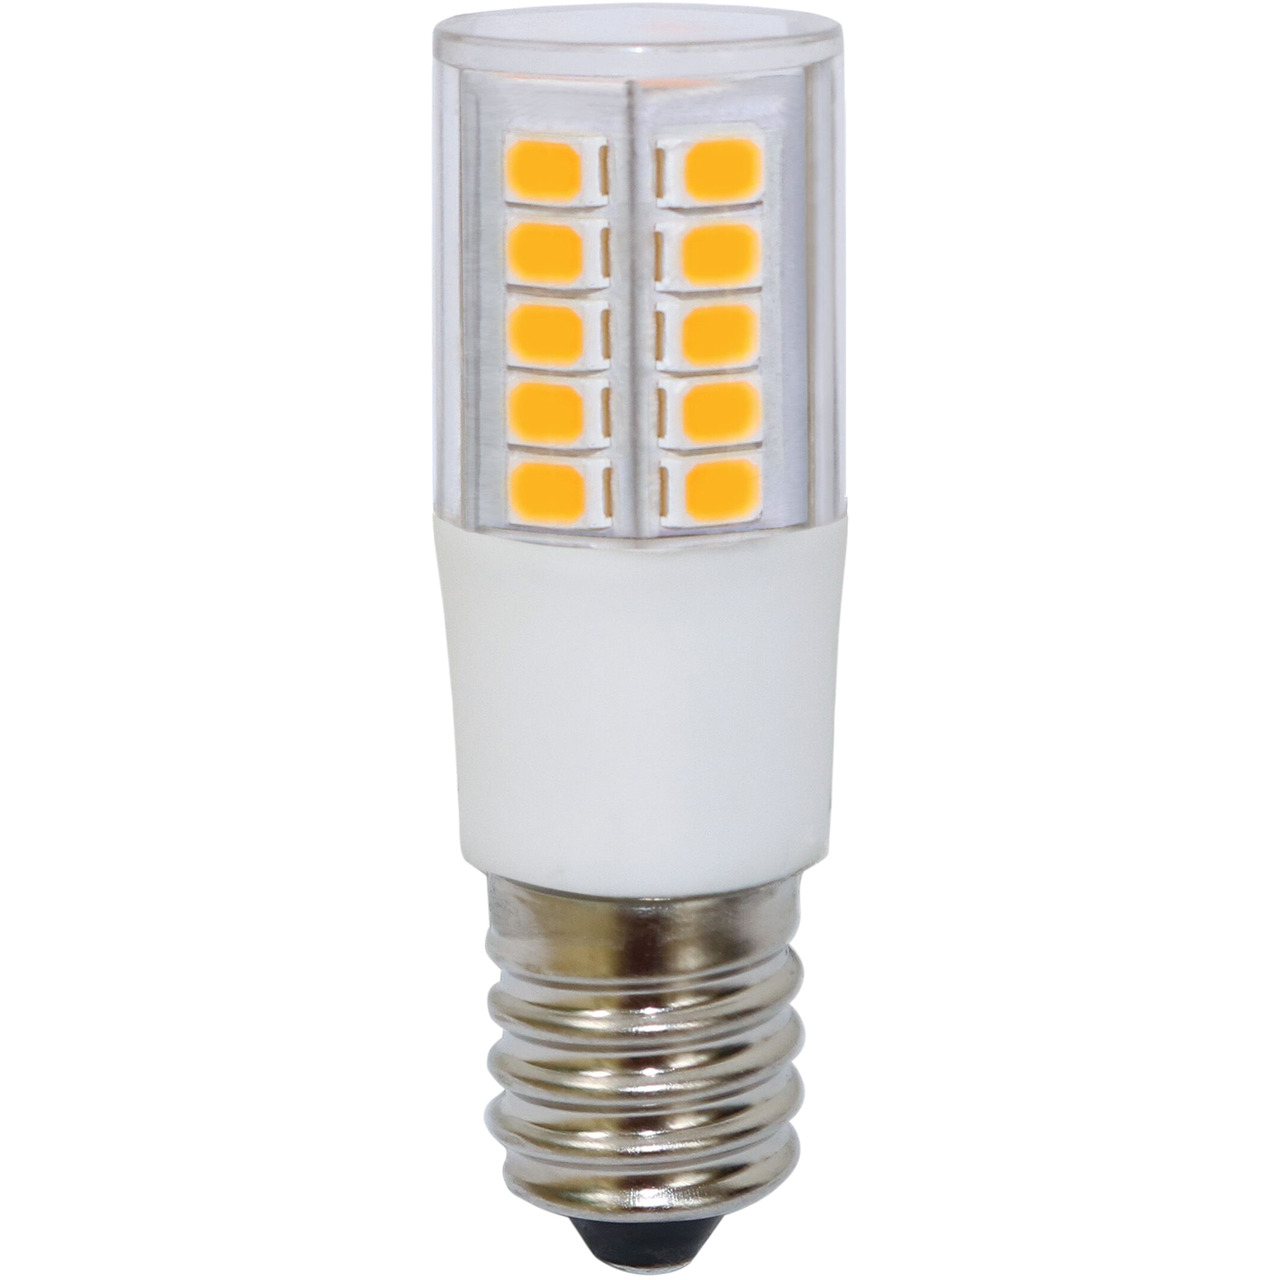 LIGHTME 5-5-W-T20-LED-Kolbenlampe E14- warmweiss